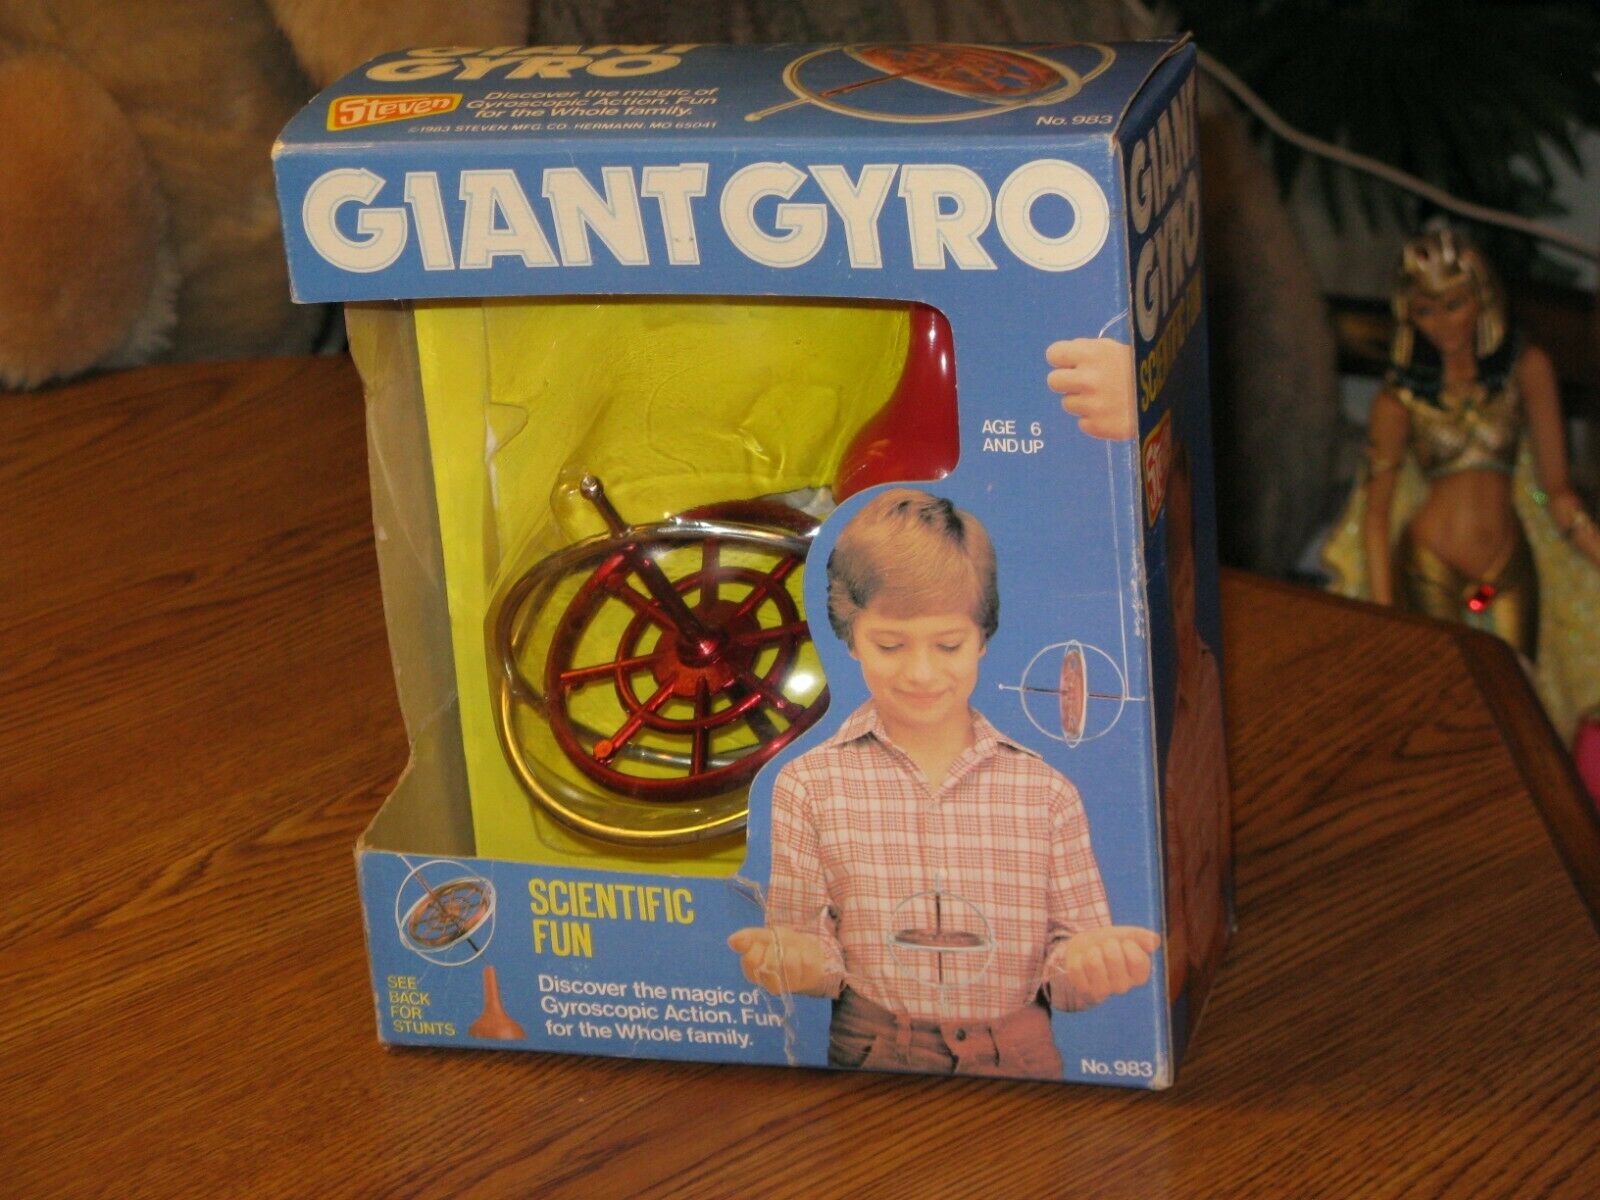 Vintage 1983 Giant Gyro Gyroscopic Scientific Top Toy Mib By Steven Mfg Co.